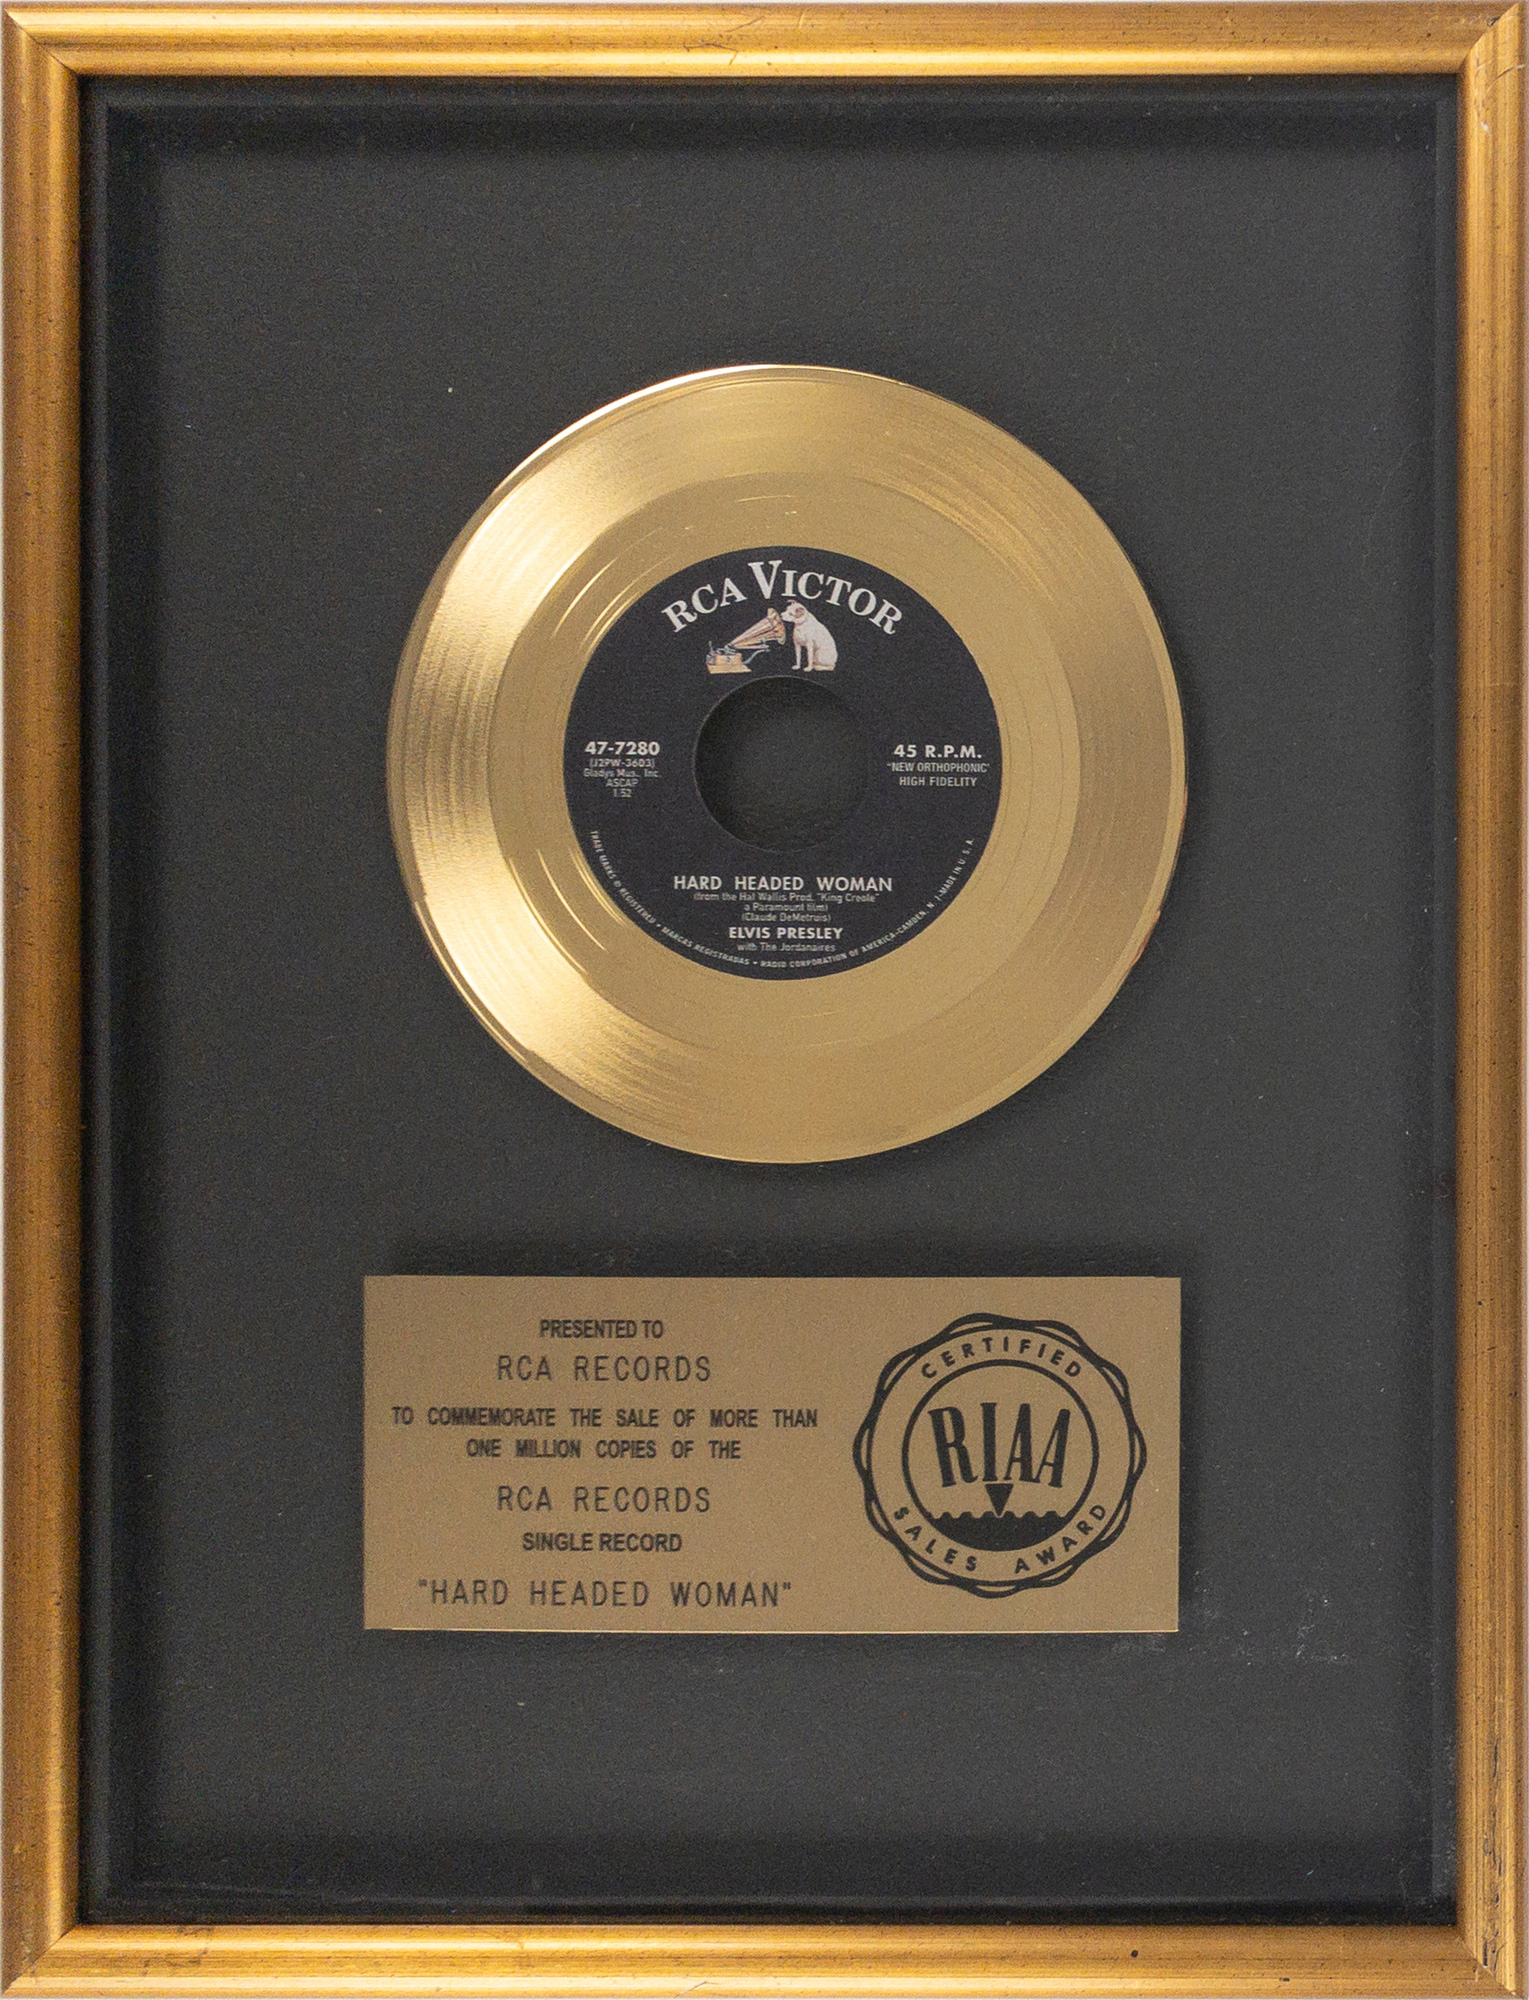 Elvis Gold Record Key Ring